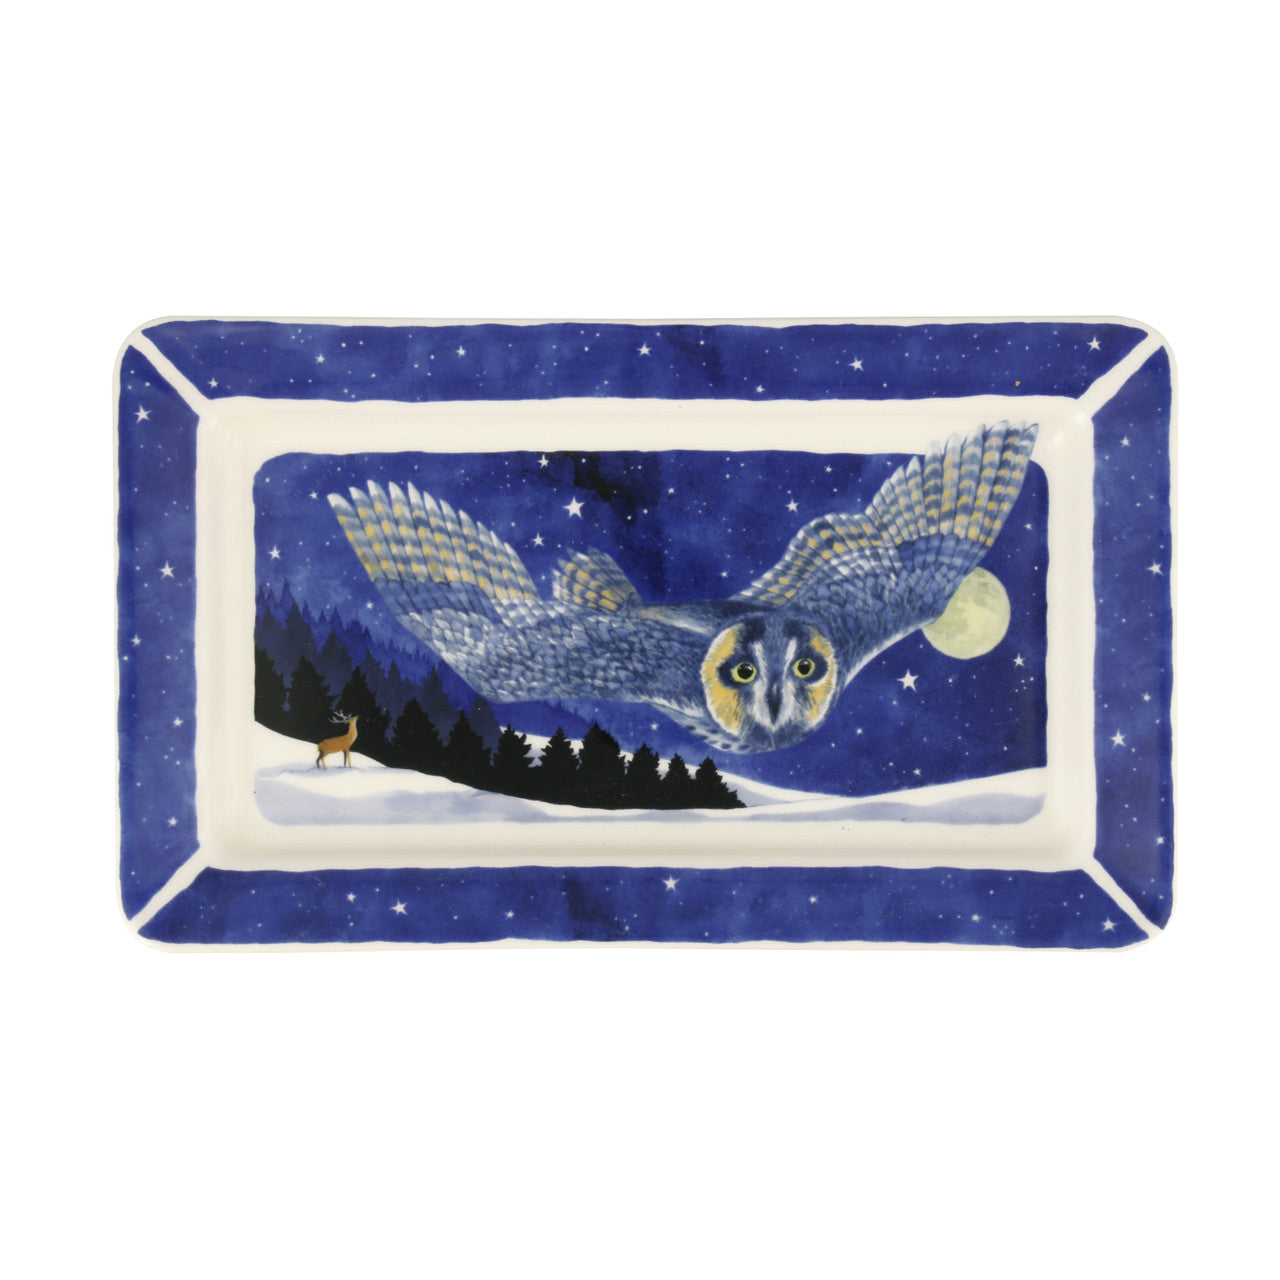 Handmade medium oblong plate in Emma Bridgewater's Winter Animals Winter Owl Pattern.